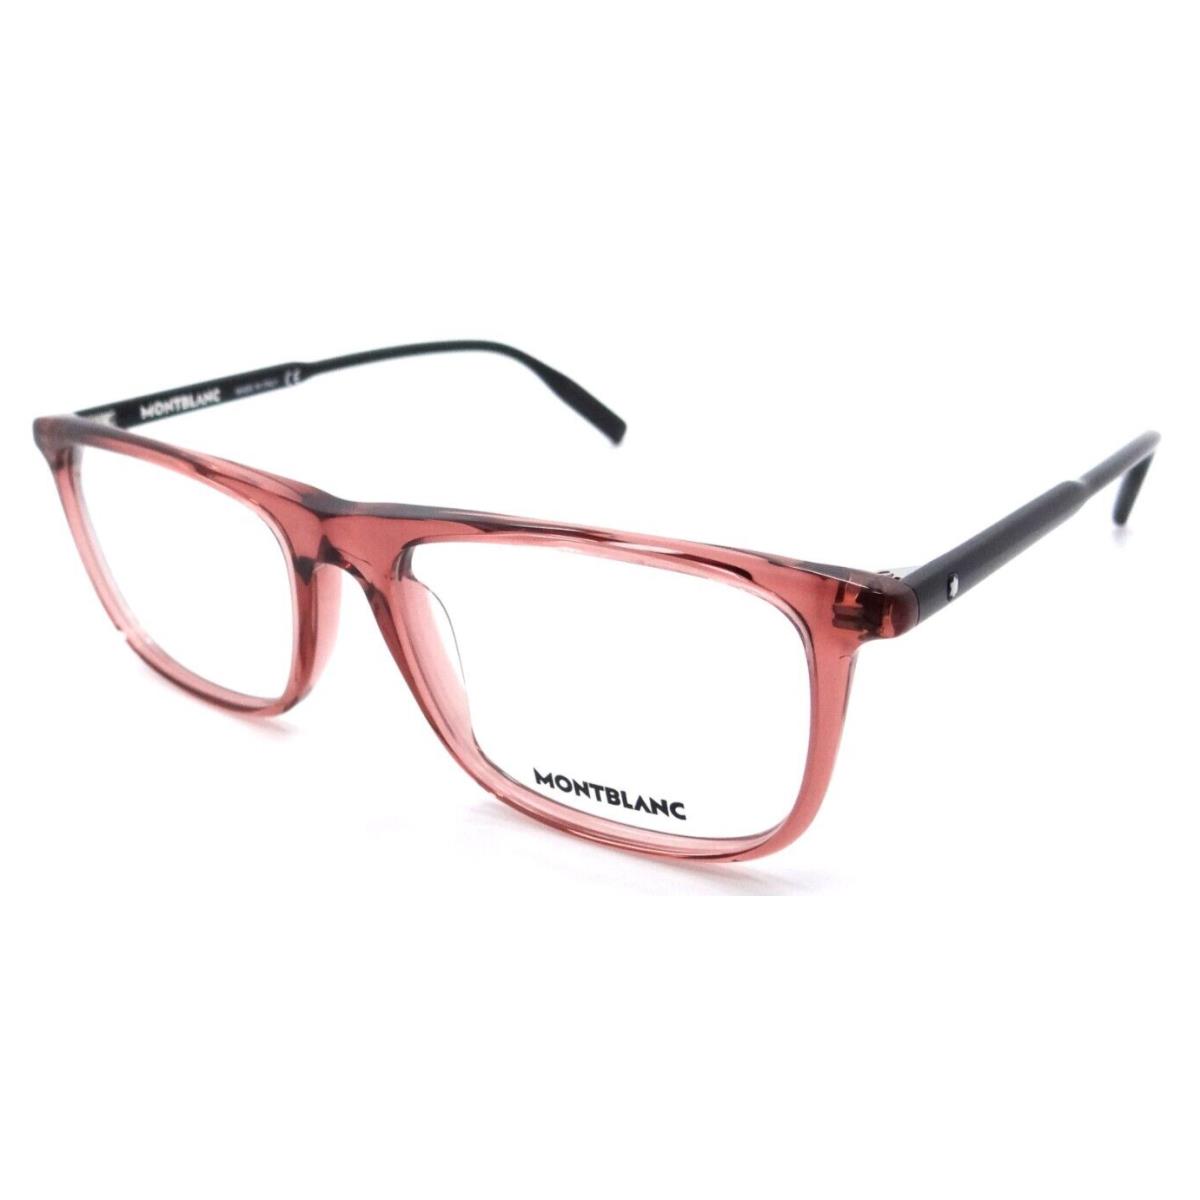 Montblanc Eyeglasses Frames MB0012O 016 56-18-145 Burgundy / Black Made in Italy